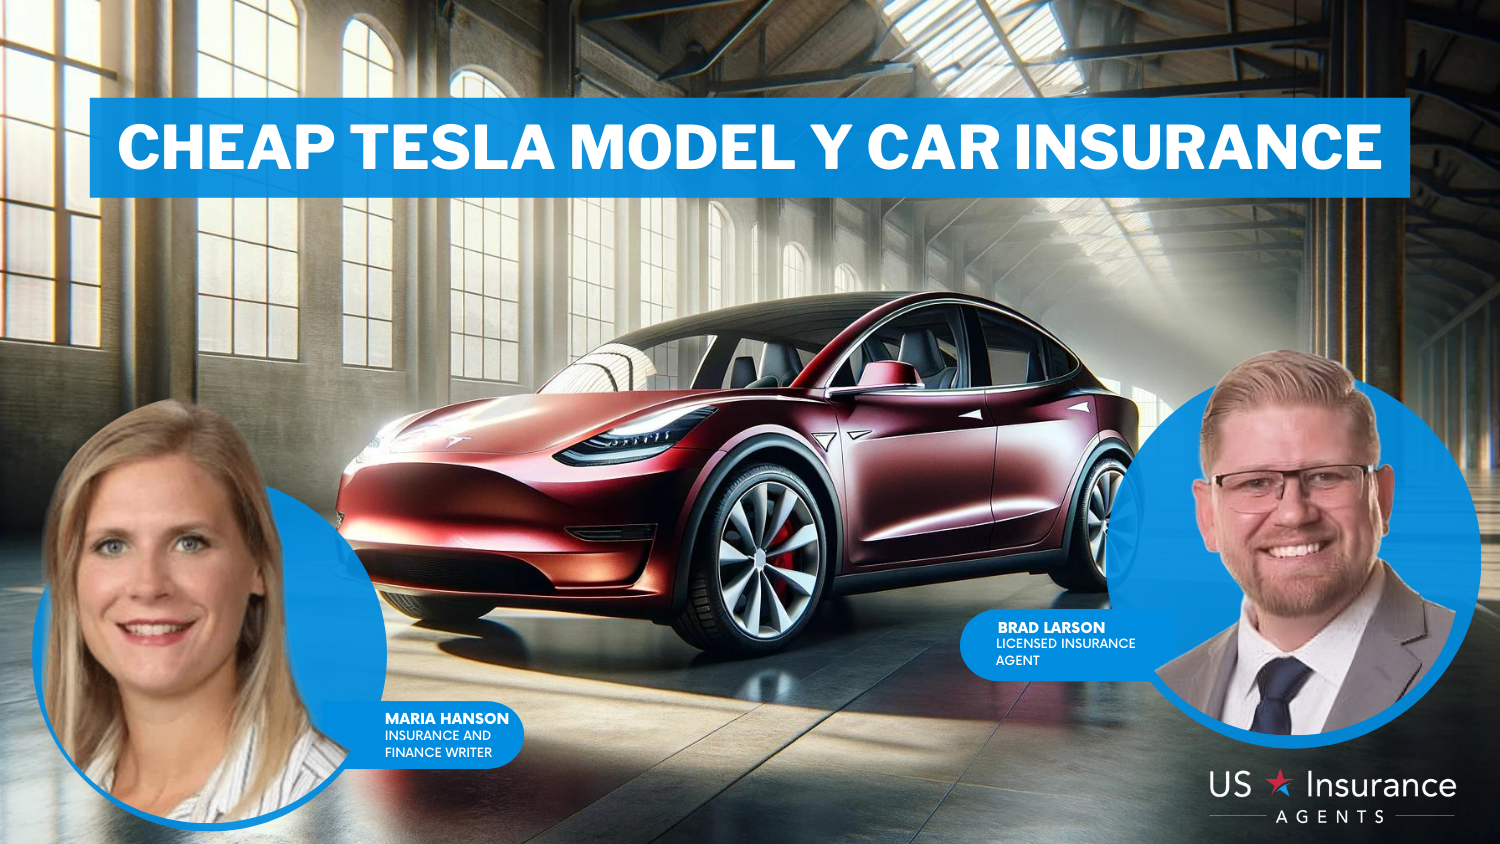 State Farm: Cheap Tesla Model Y car insurance, auto insurance